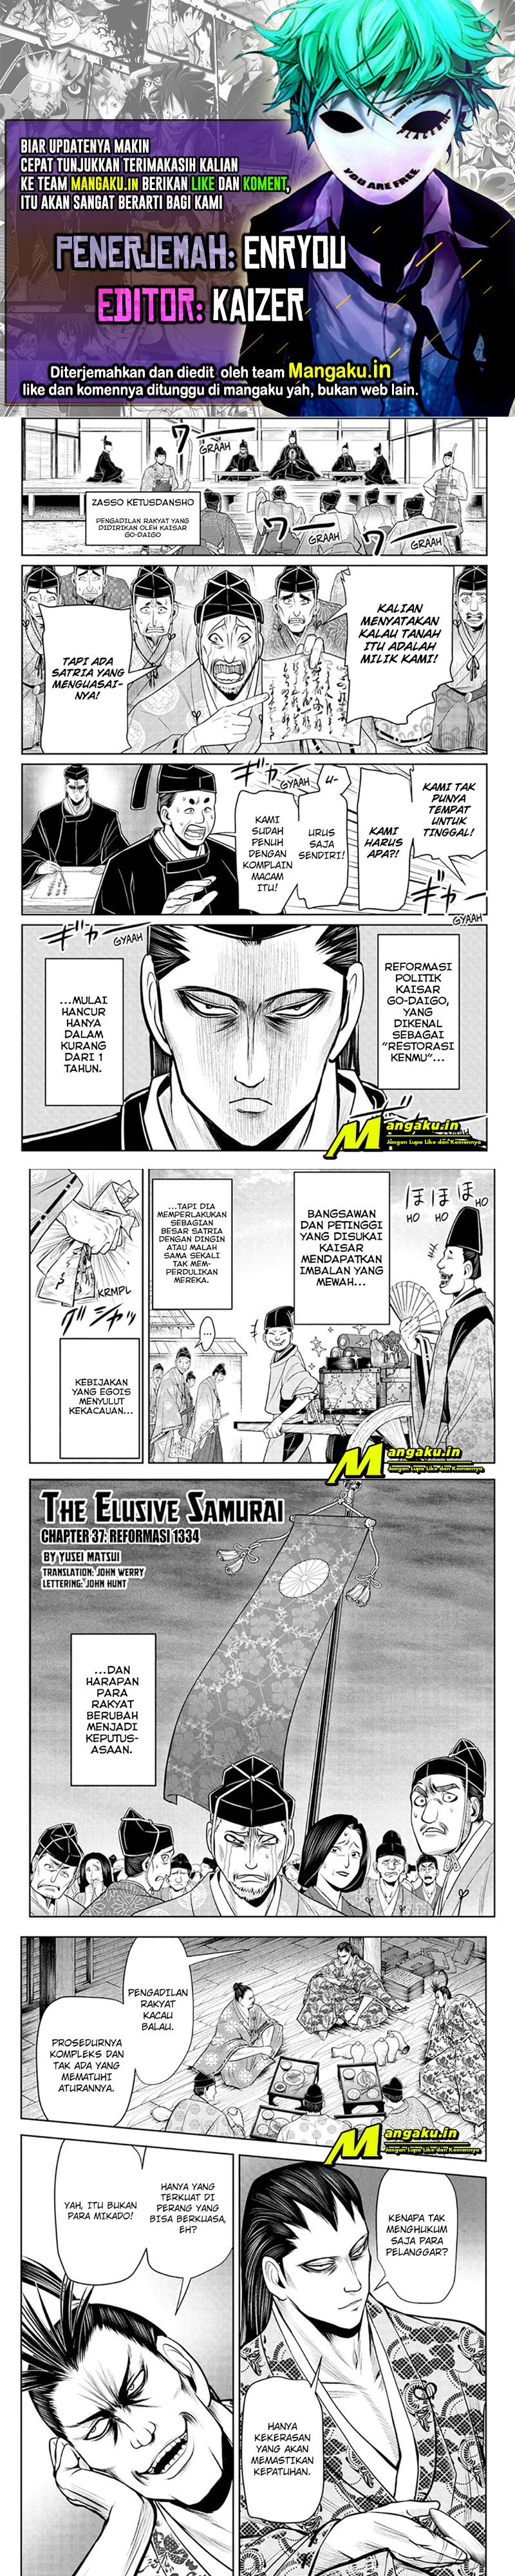 The Elusive Samurai Chapter 37